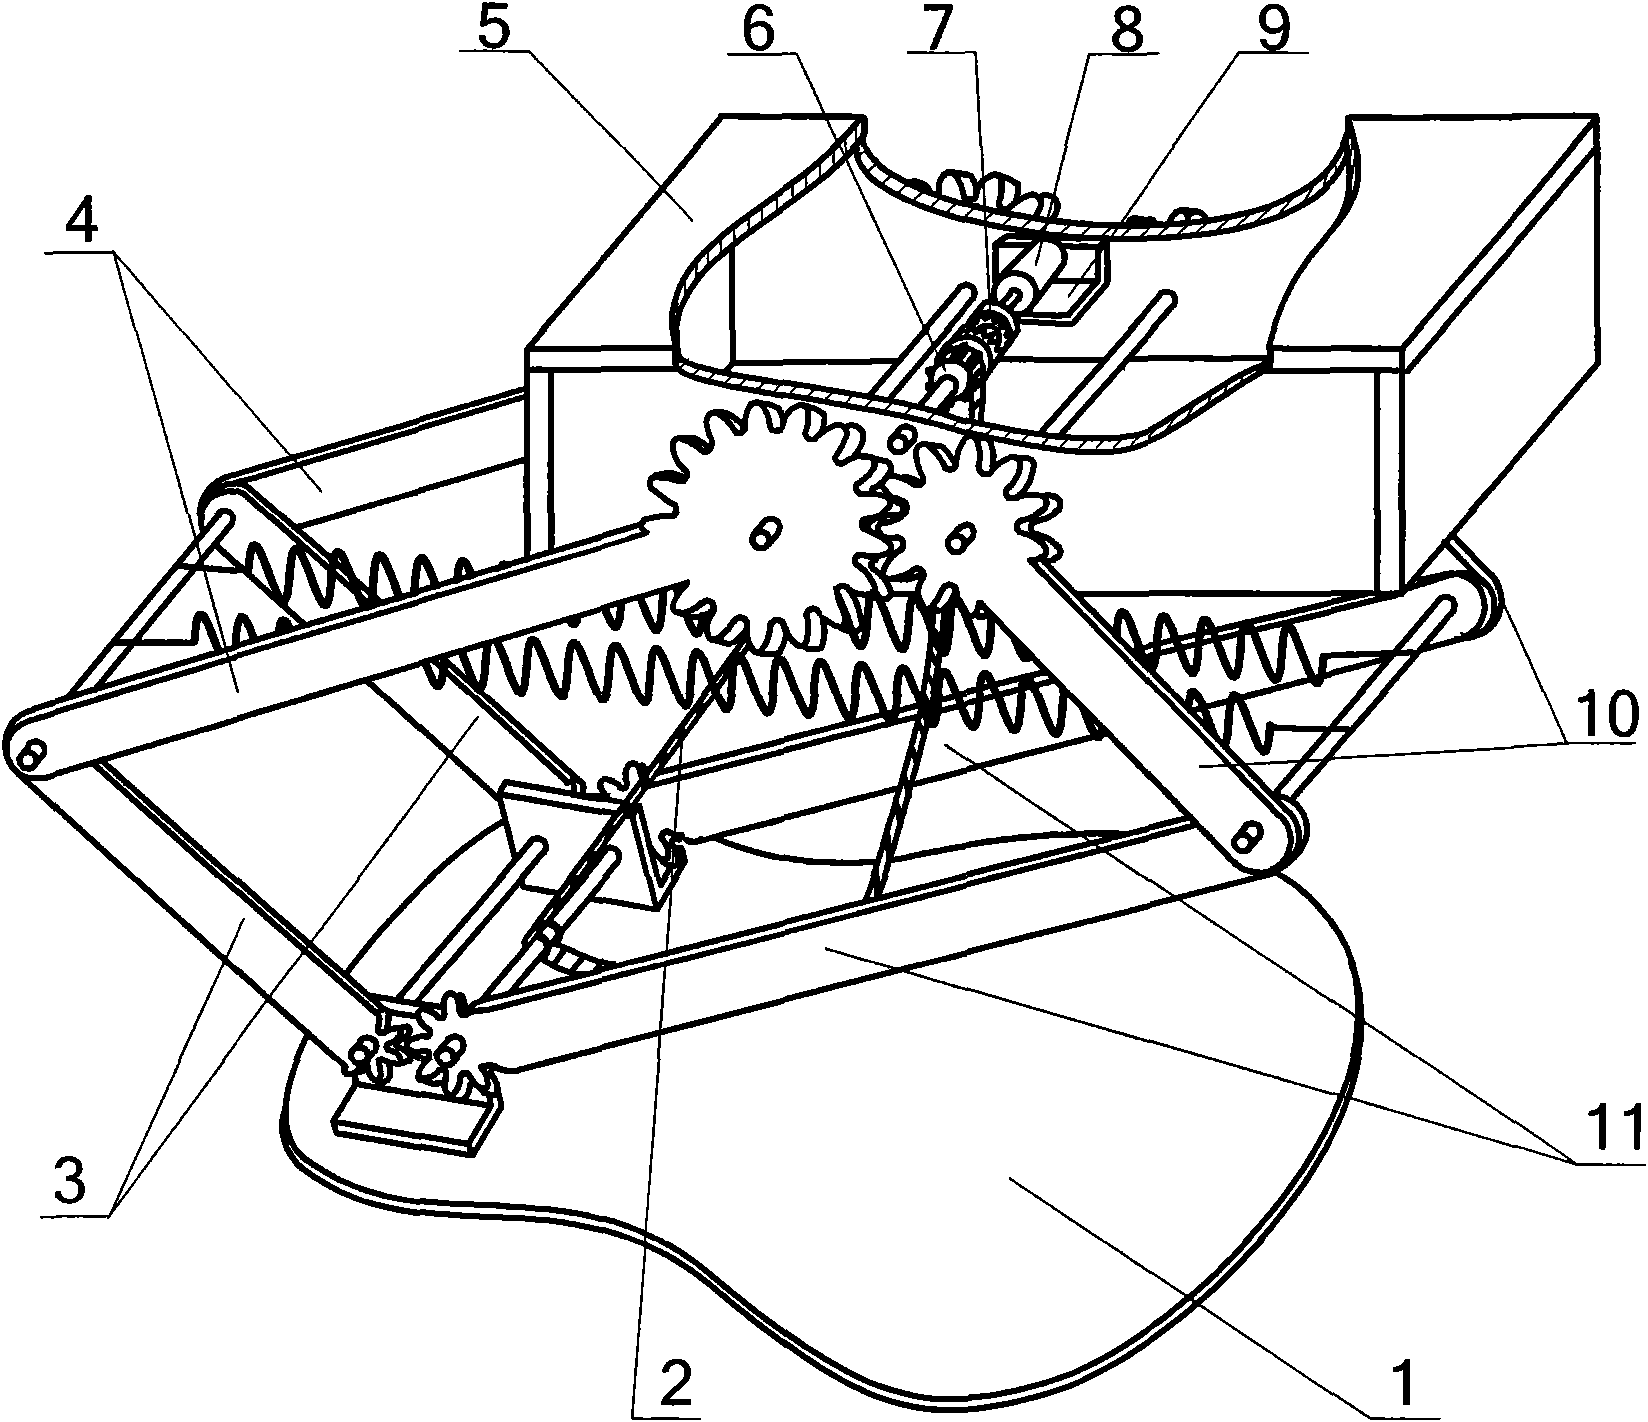 Asymmetrical gear six-rod bionic bouncing mechanism